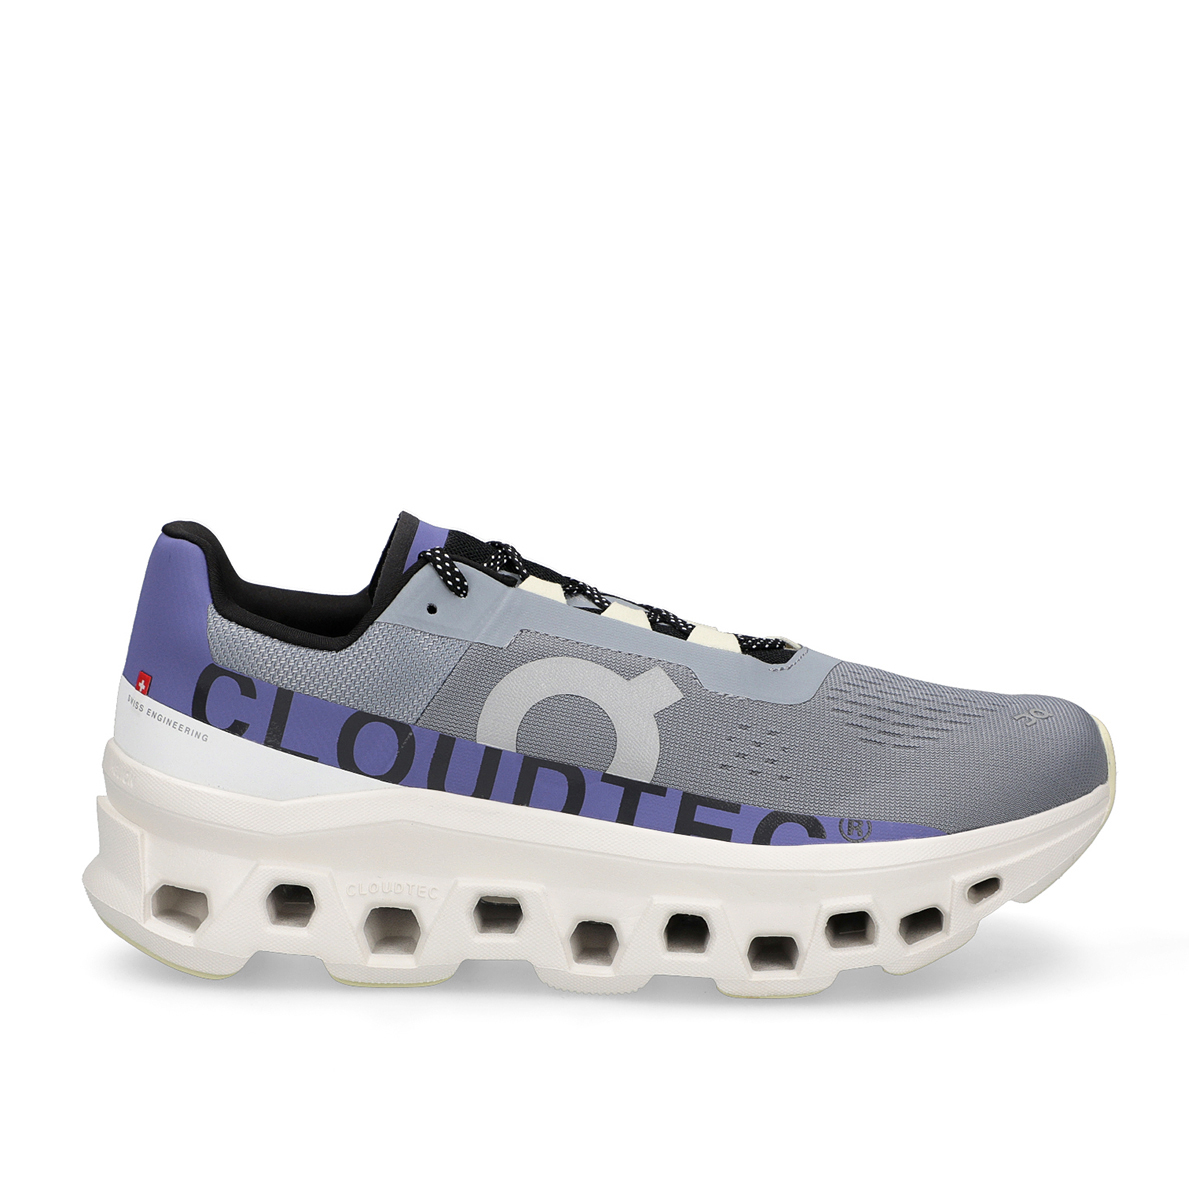 Buy Cloudmonster Running Shoes - Purple Online in Kuwait | Boutiqaat